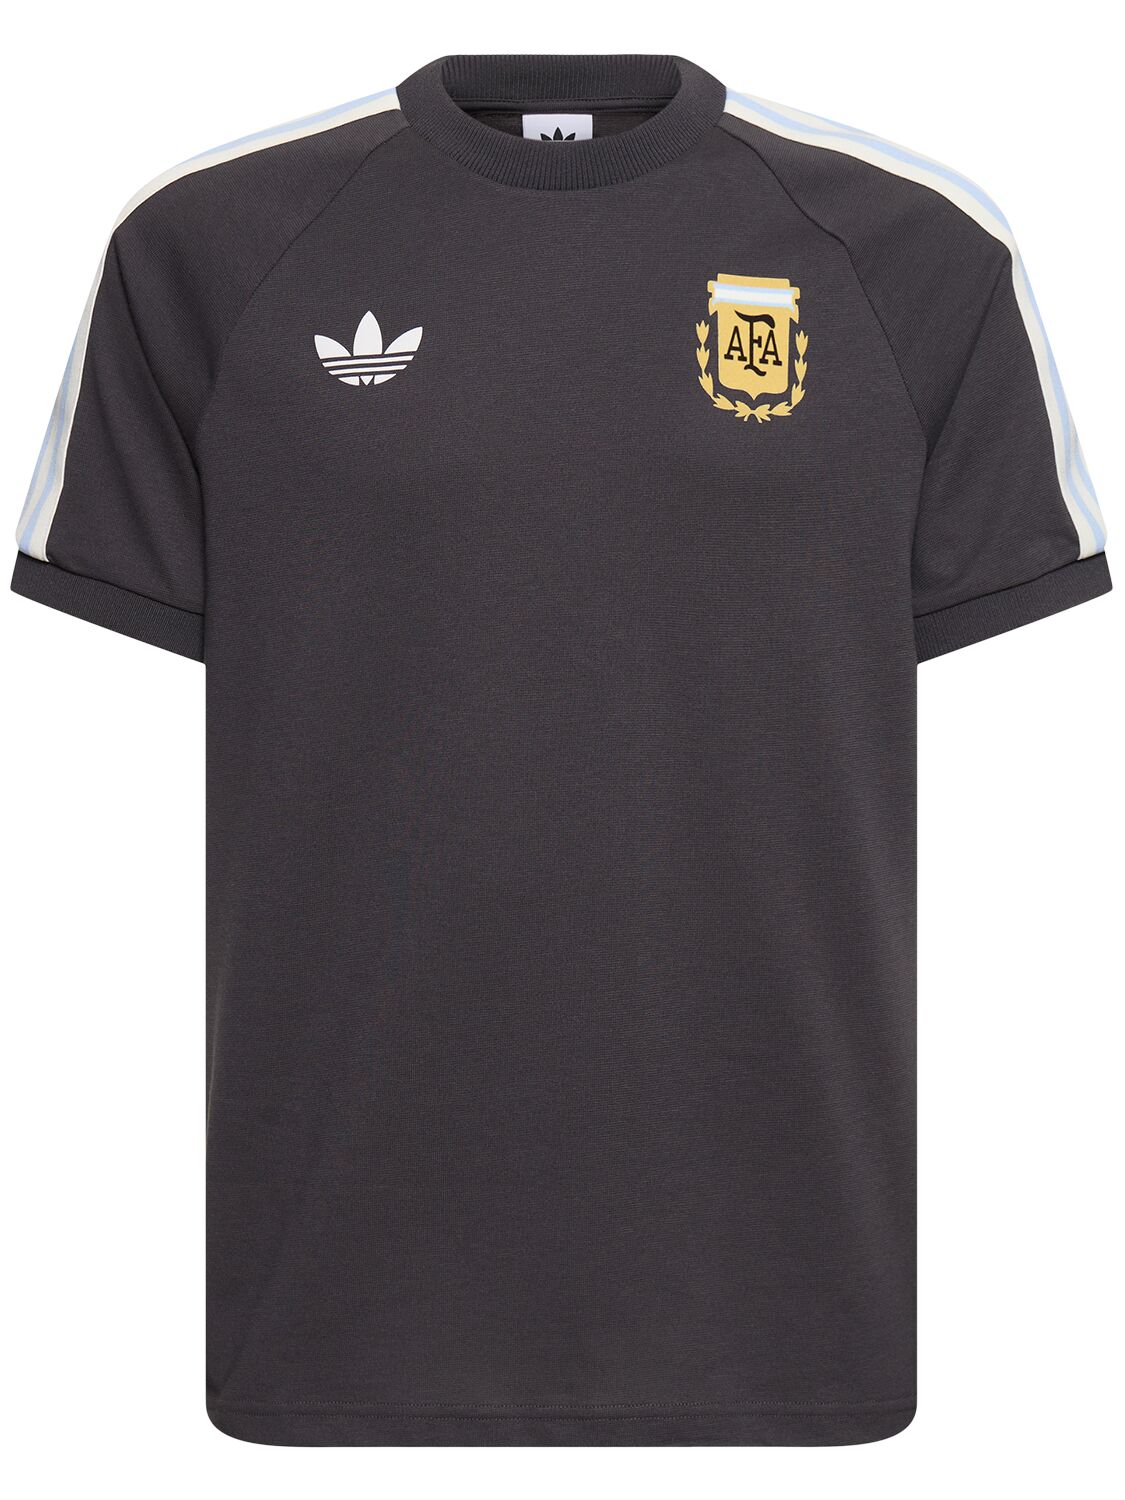 Argentina T-shirt